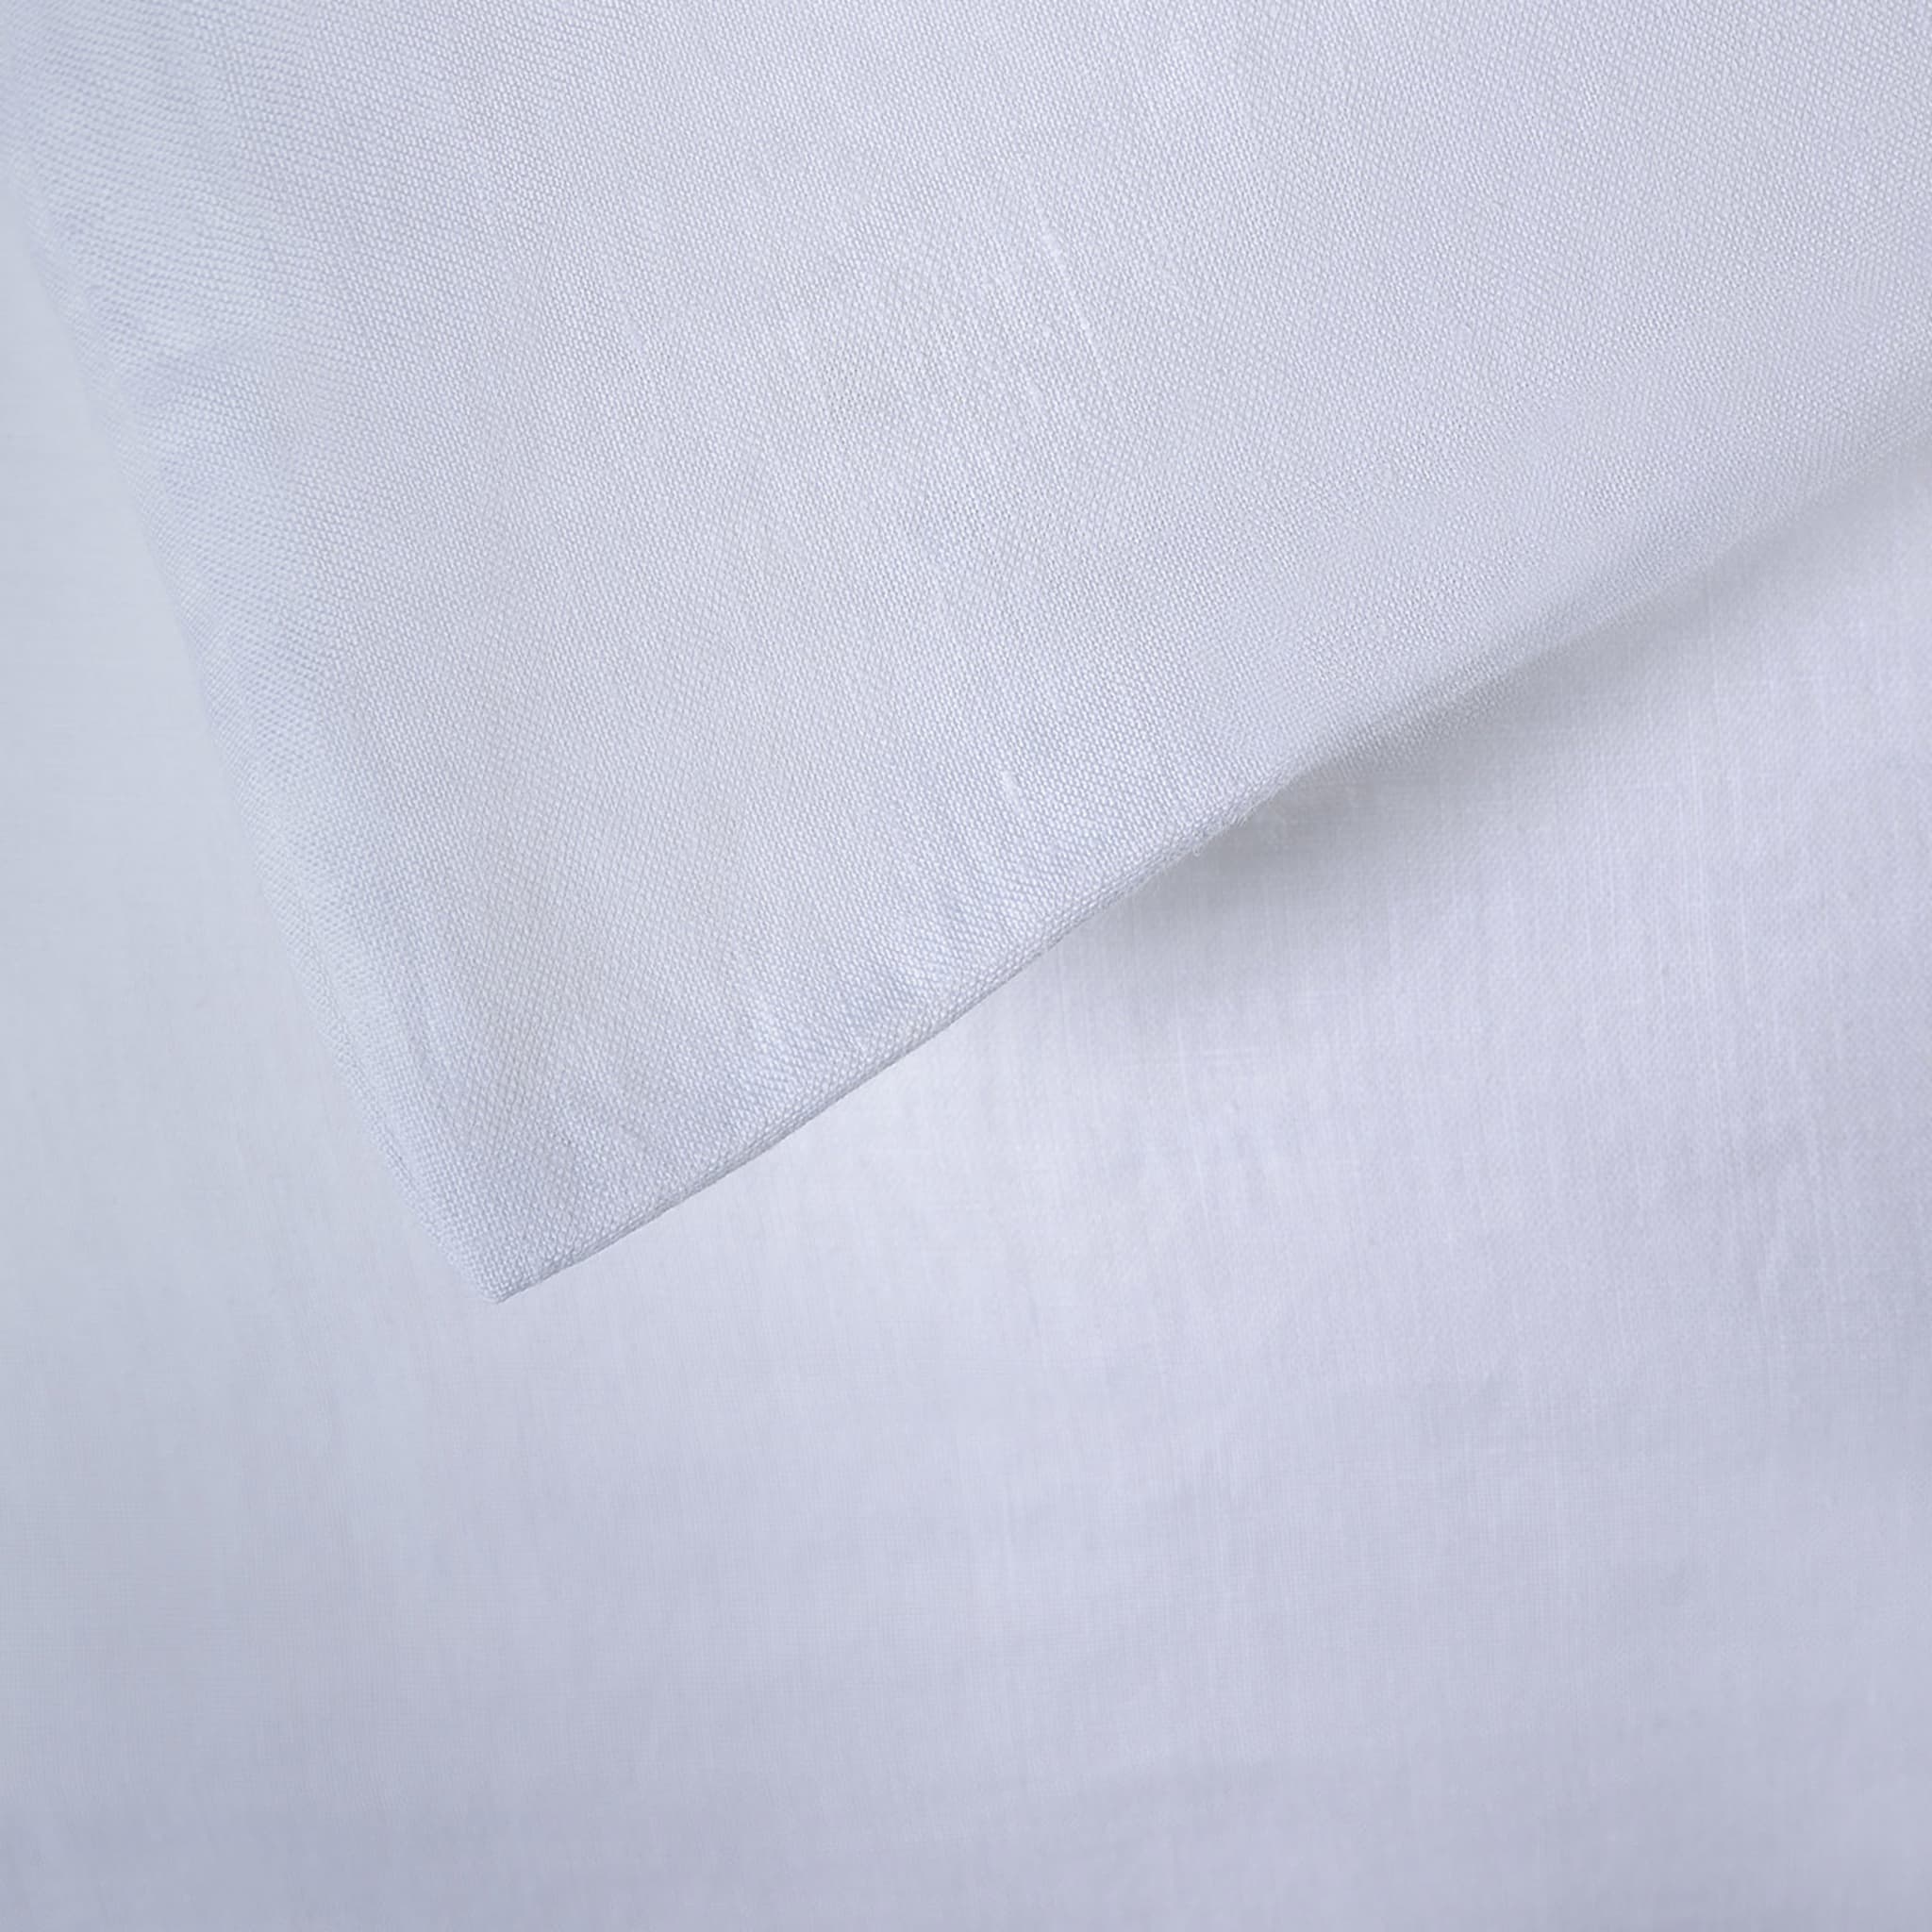 Kanapa White Double Bed Duvet Cover - Alternative view 1